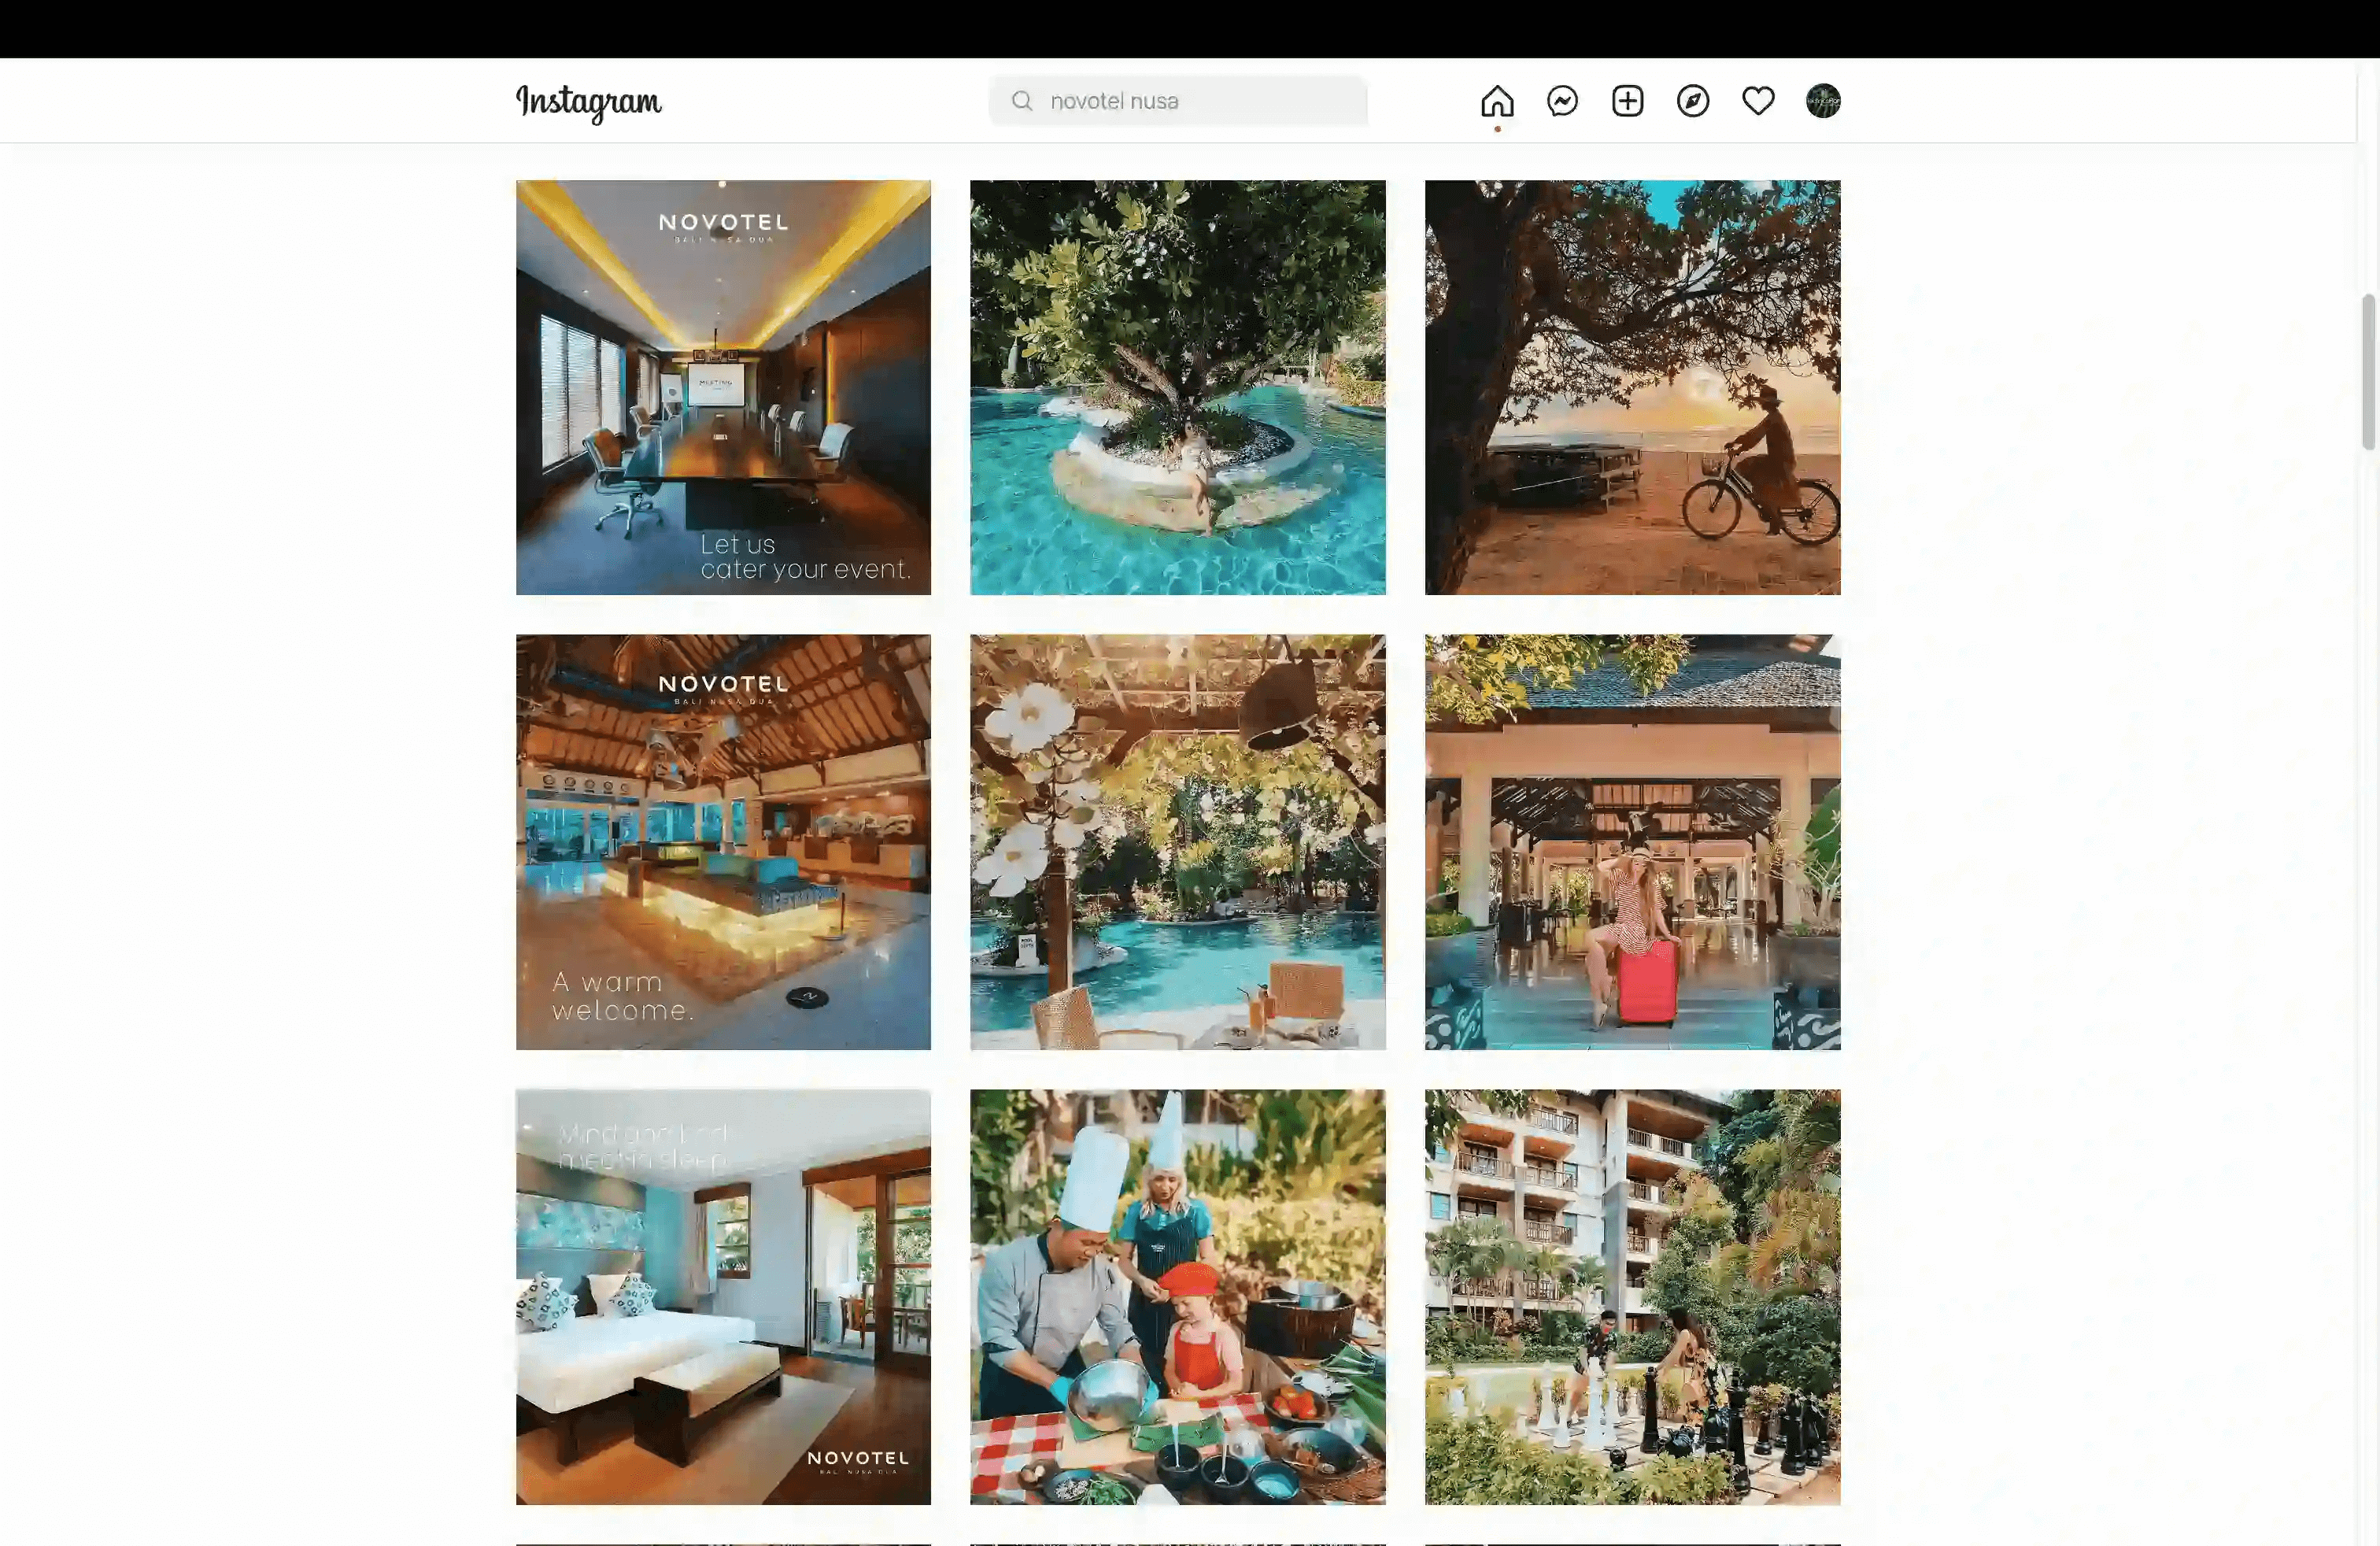 Compilation of Instagram feeds showcasing Novotel Hotels